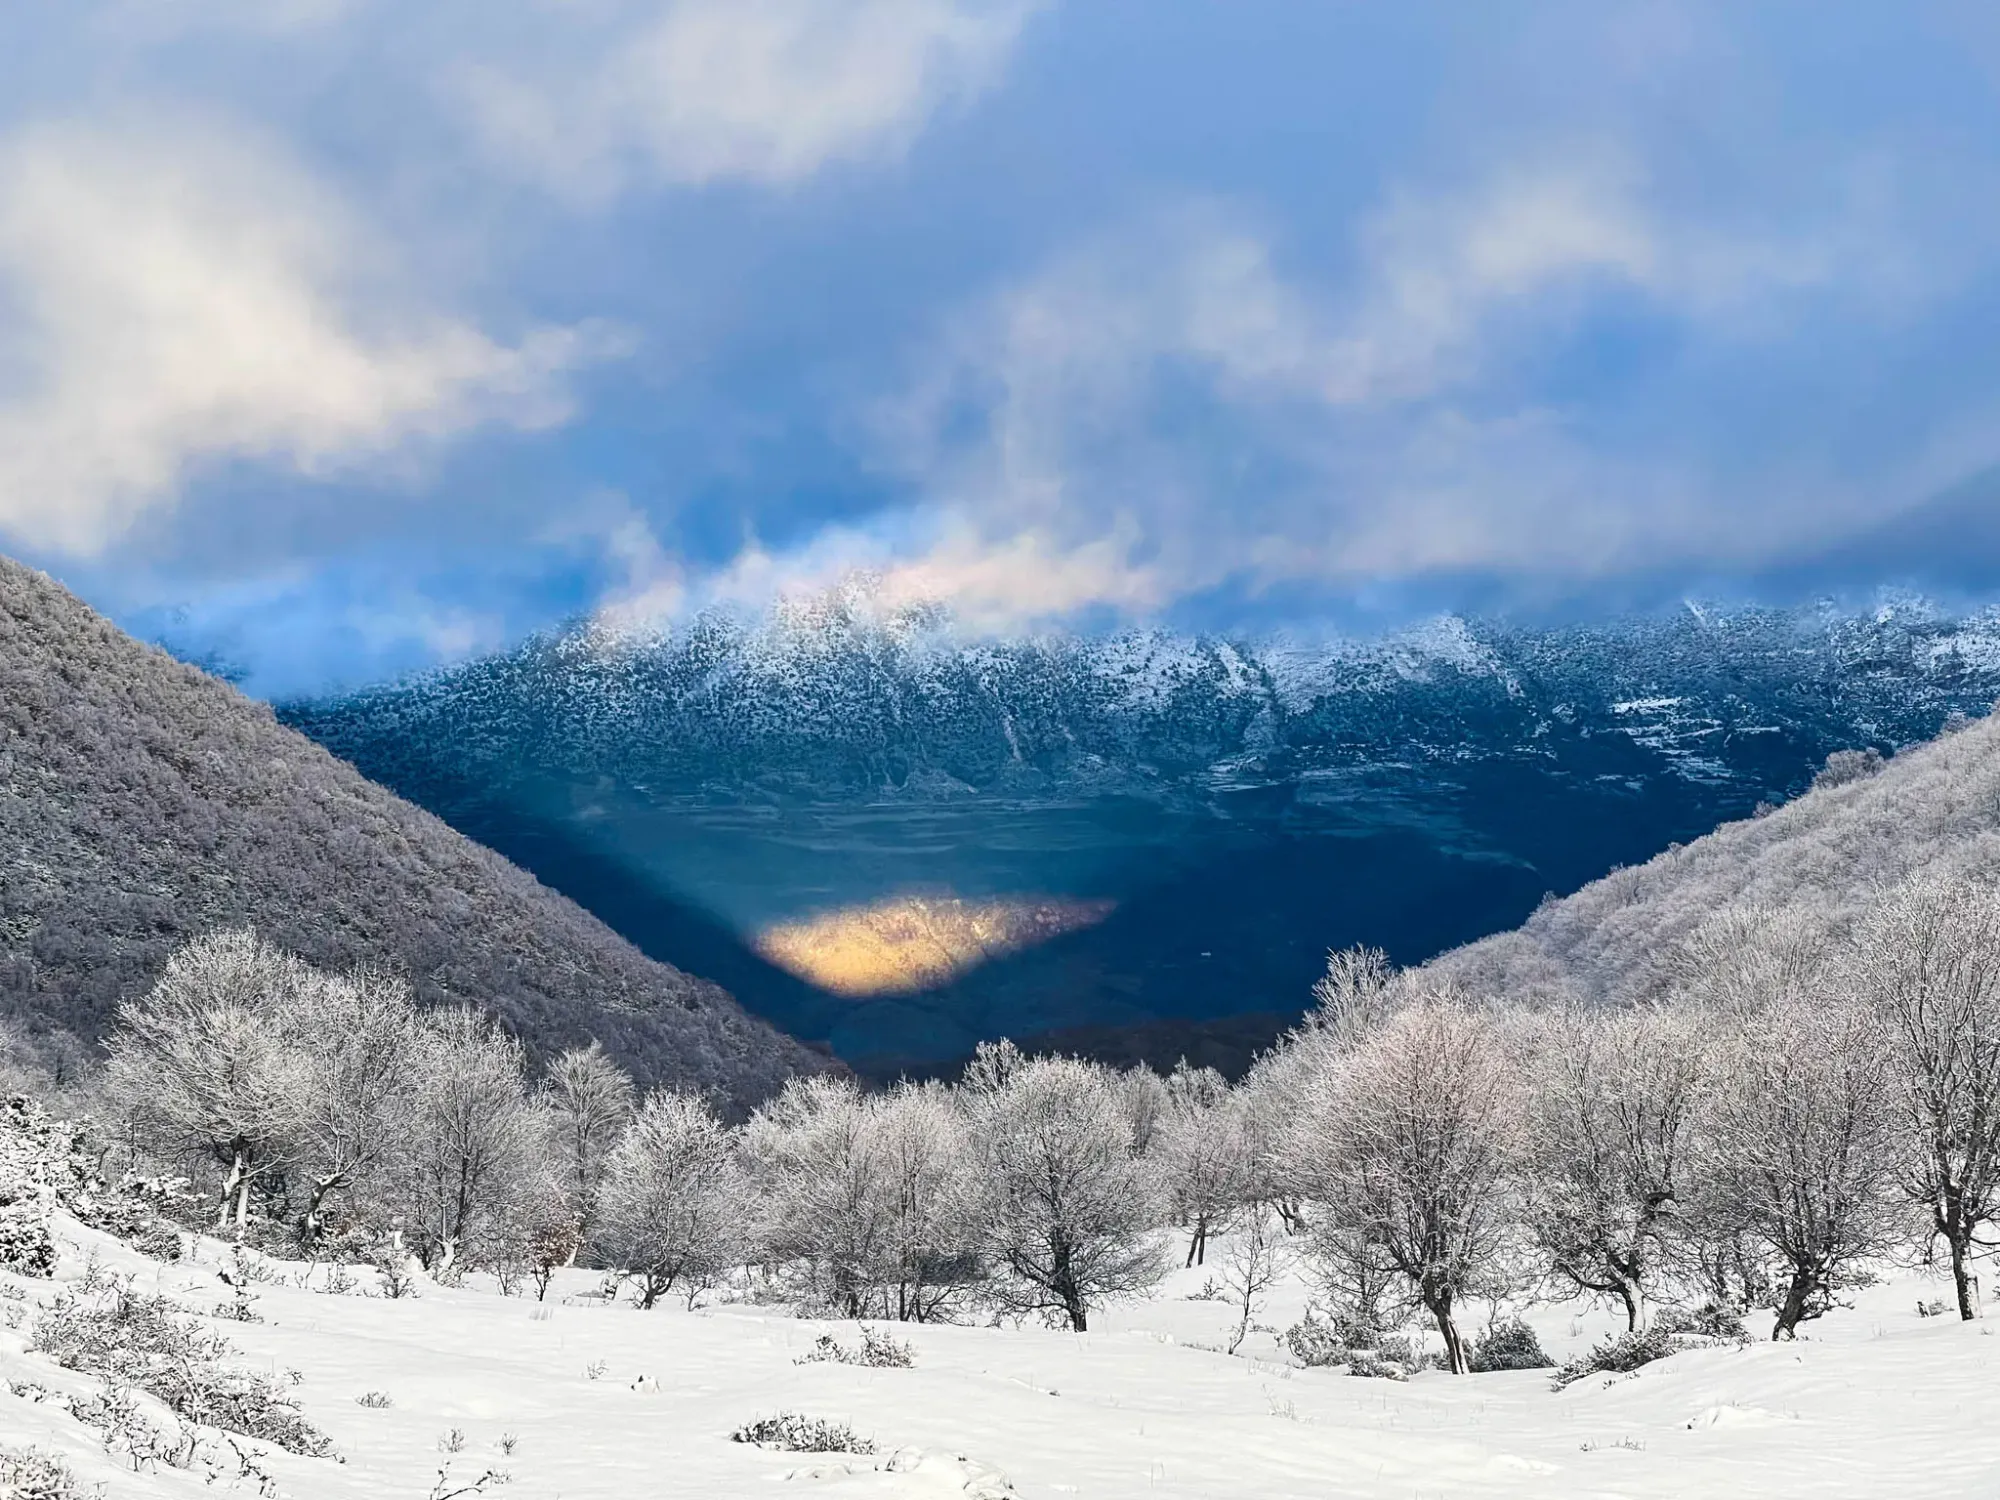 A view from the hidden valley of Zagoria, Albania.